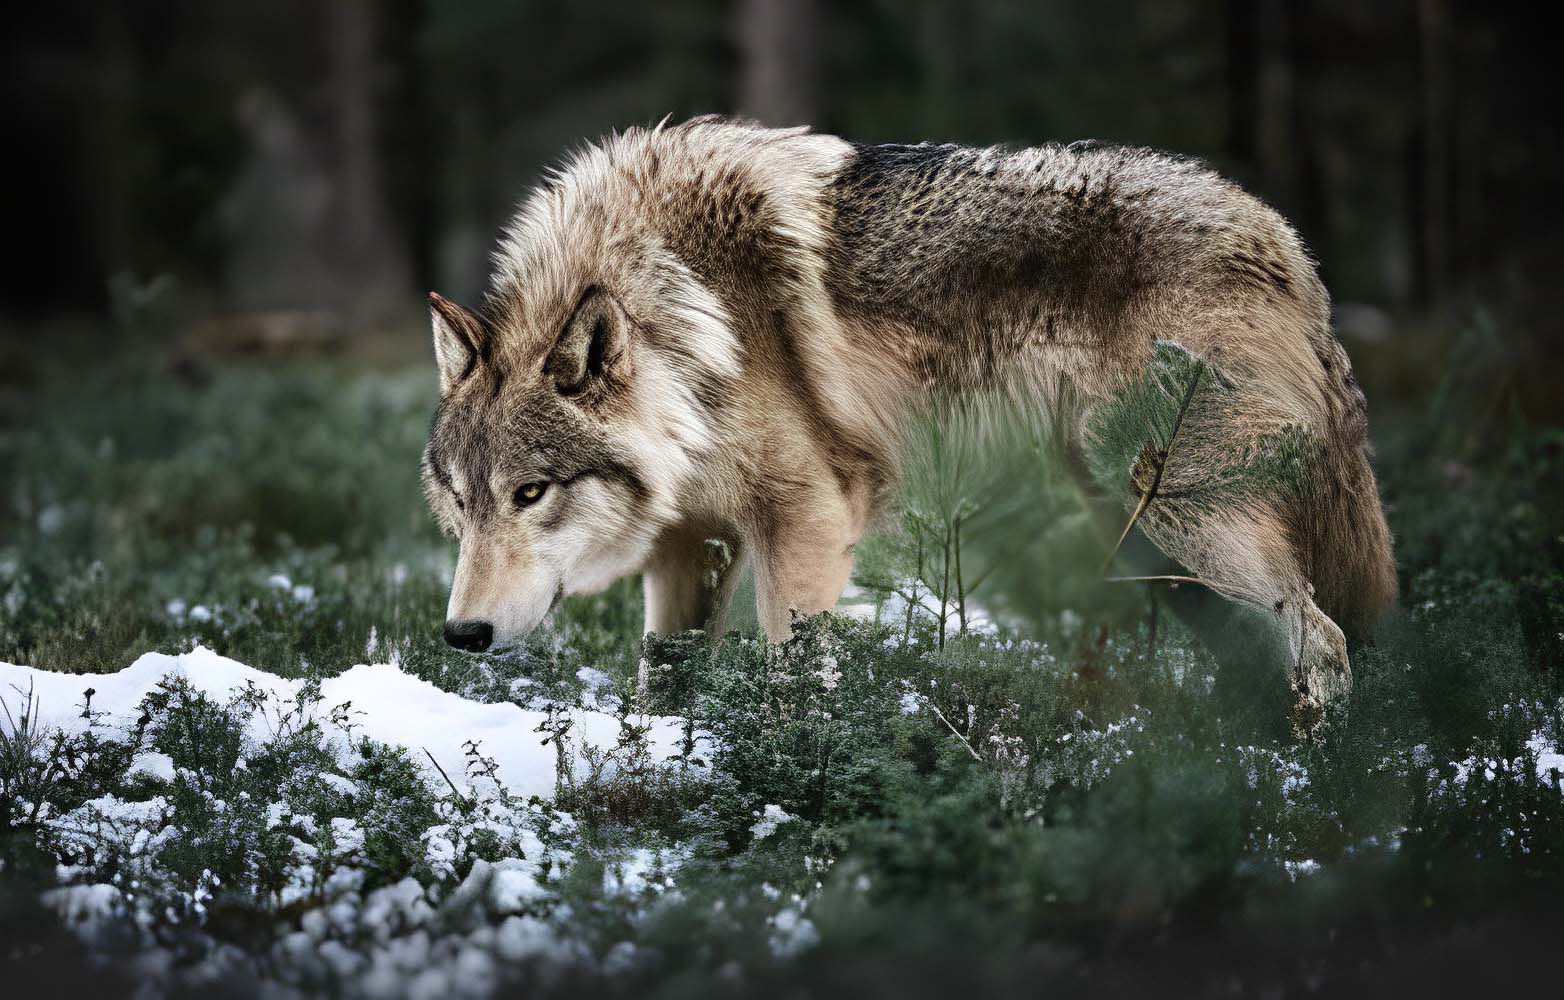 Wolfdog dog Hybrid breeds, Is Czech wolfdog Dangerous?